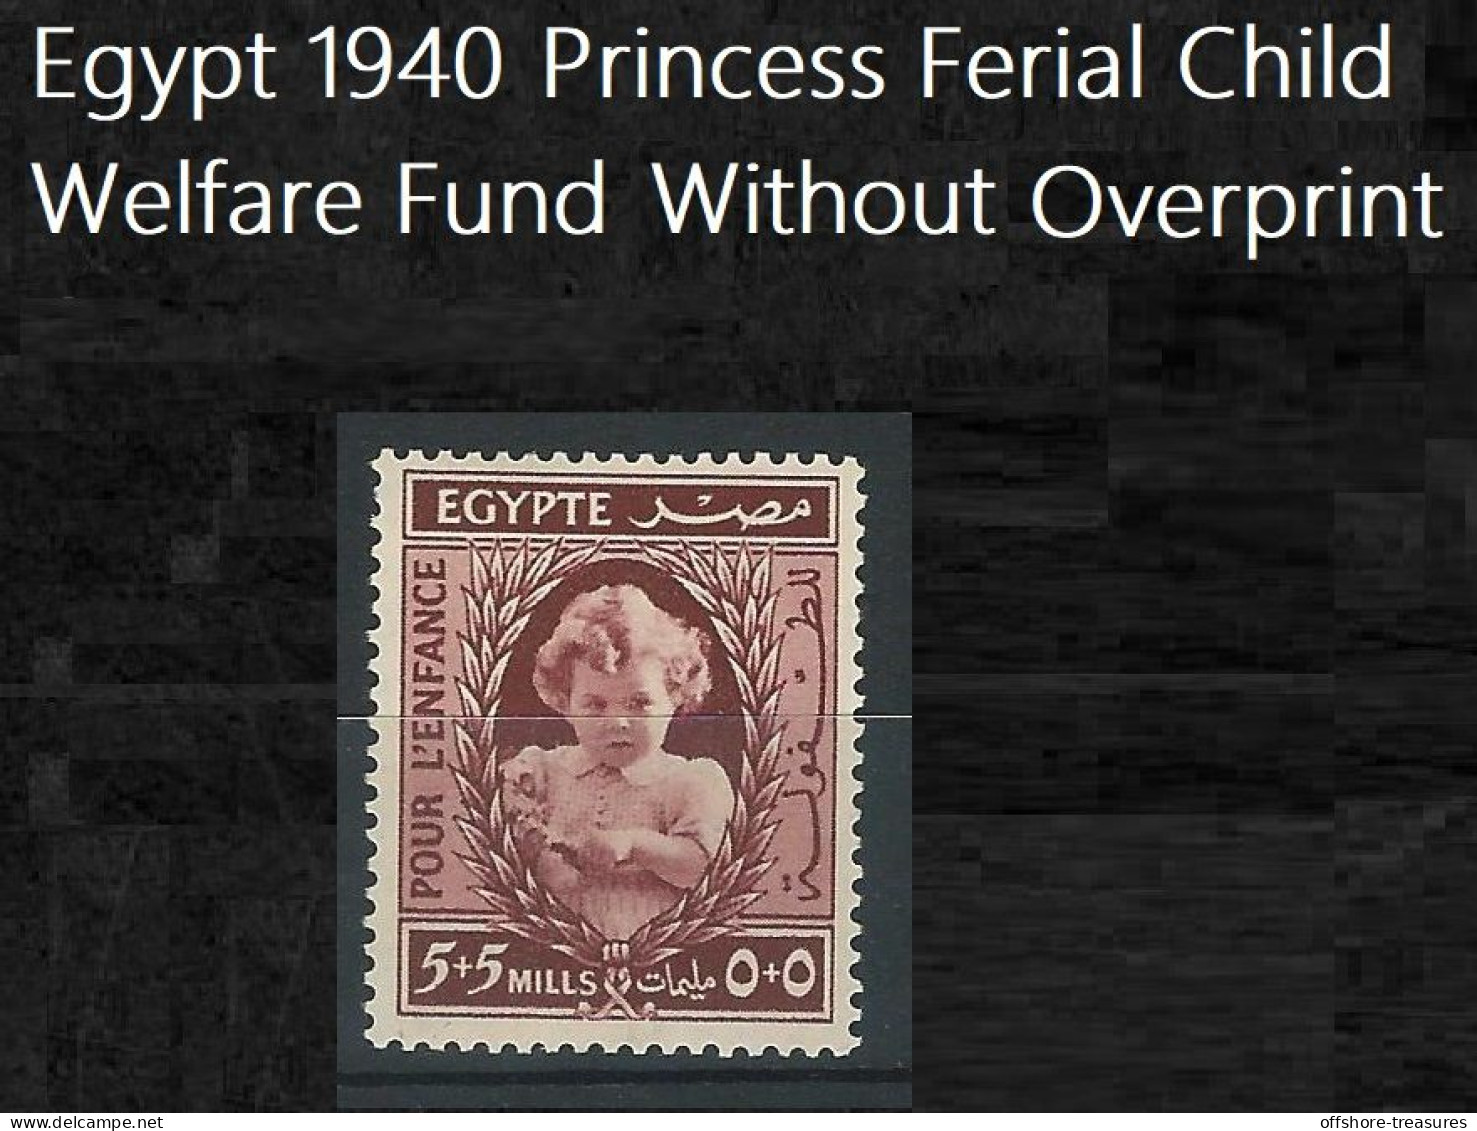 Egypt Stamp1940 No Overprint Child Welfare Fund MNH Princess Ferial POUR L'ENFANCE - Unused Stamps